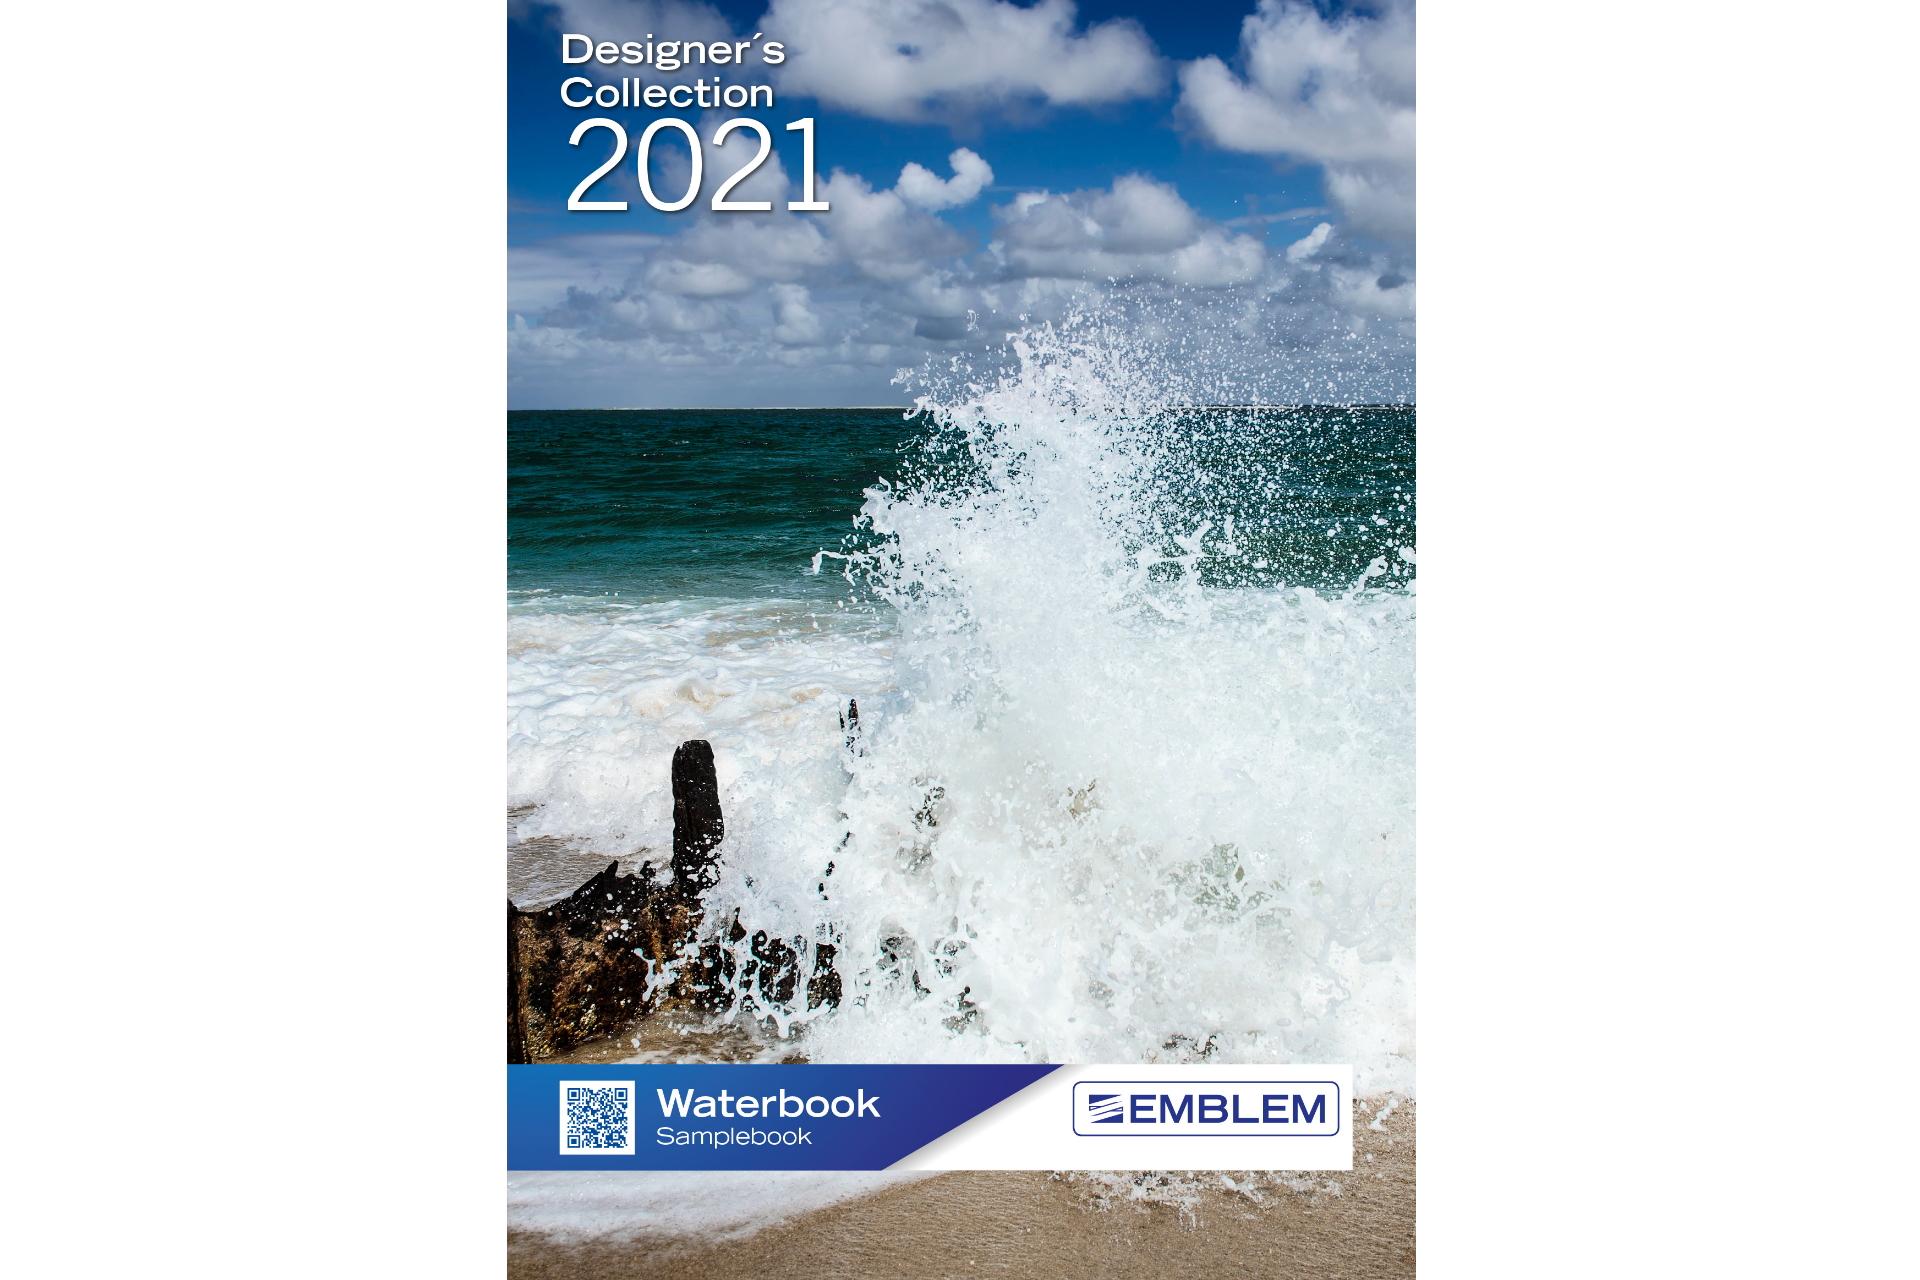 Foto: EMBLEM Waterbook - Musterbuch